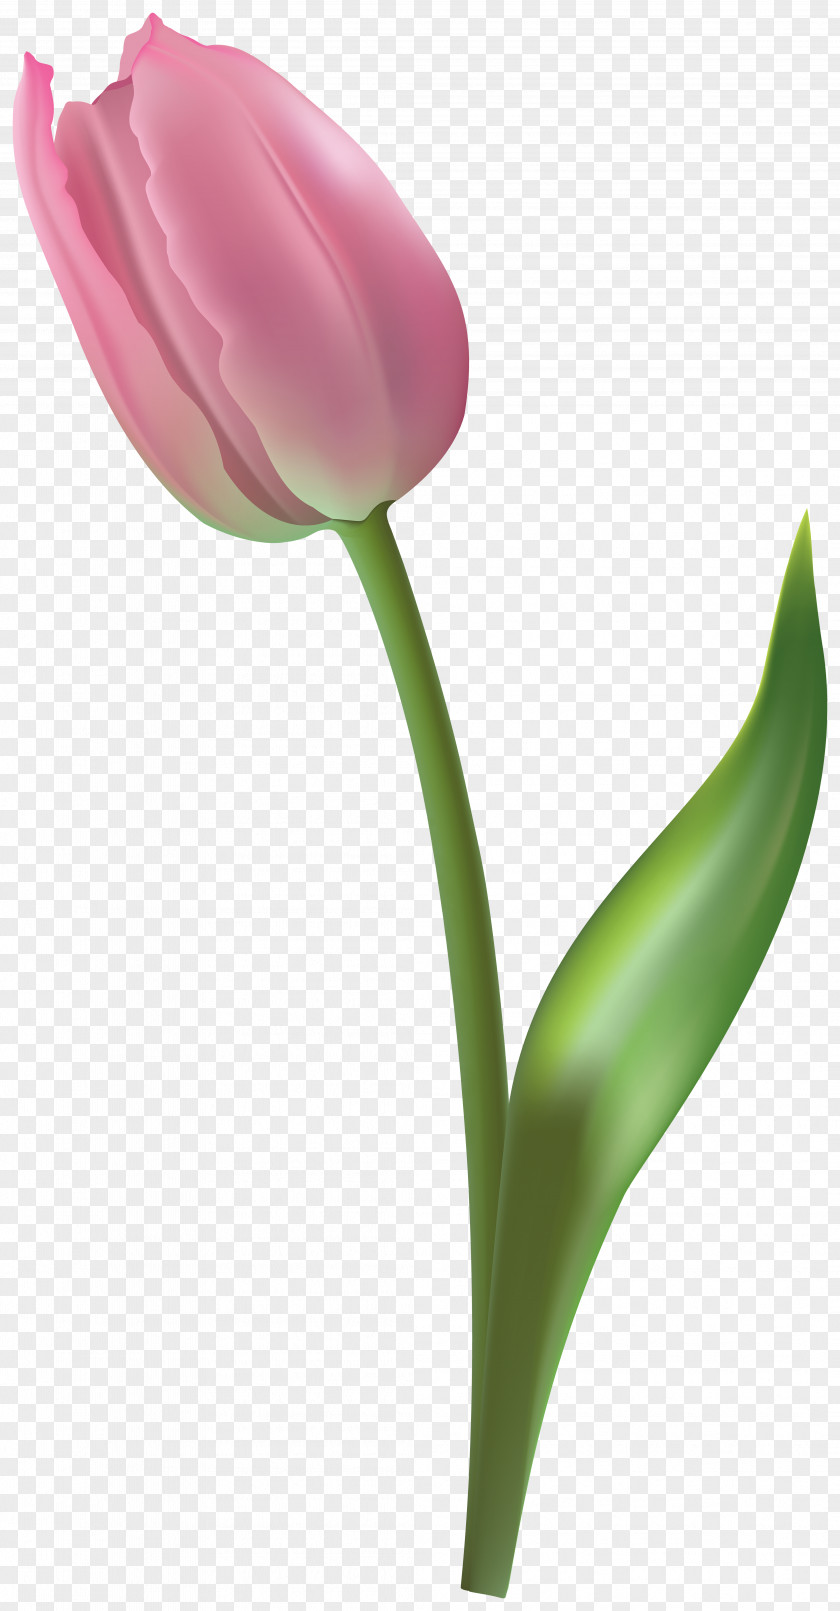 Plant Stem Bud Flower Tulip Petal Pedicel PNG